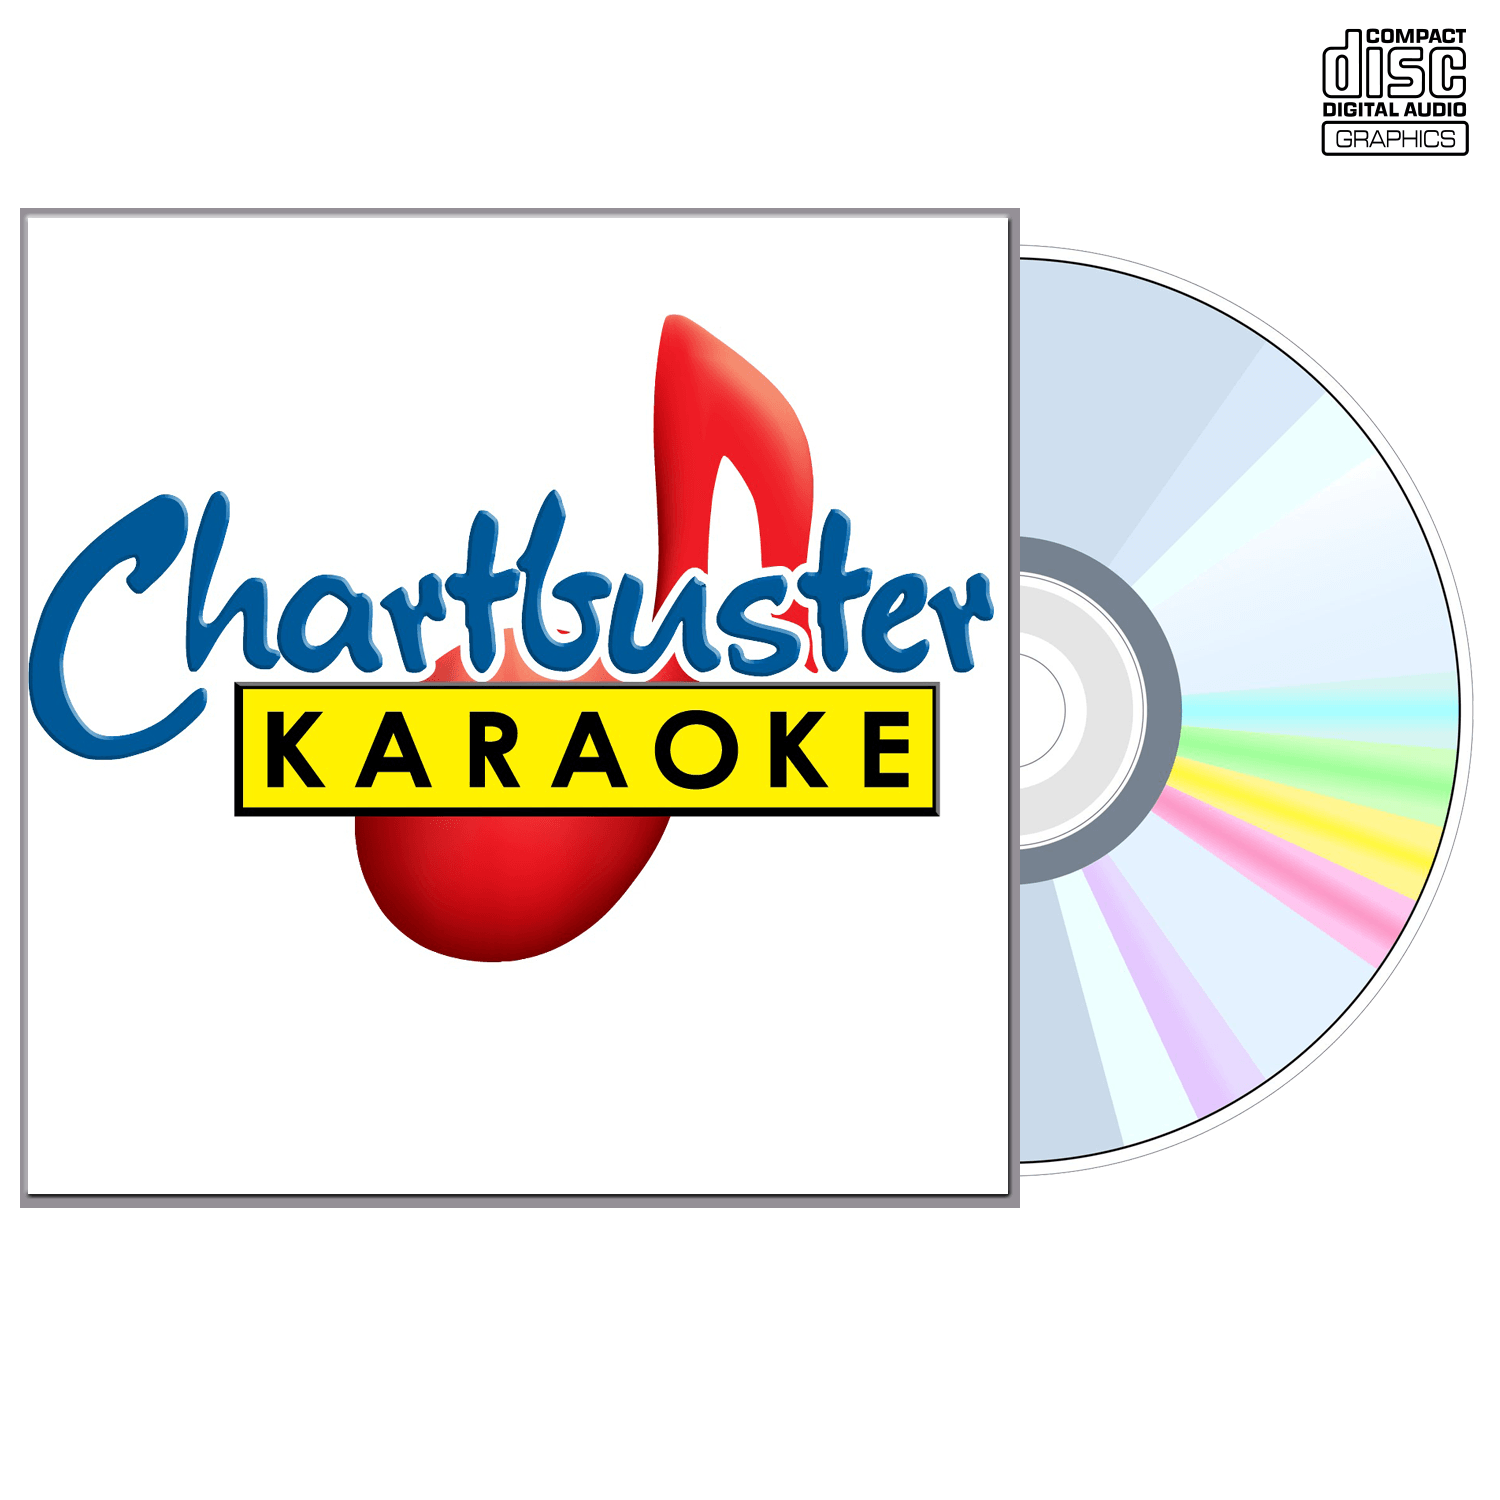 Celine Dion Vol 2 - CD+G - Chartbuster Karaoke - Karaoke Home Entertainment